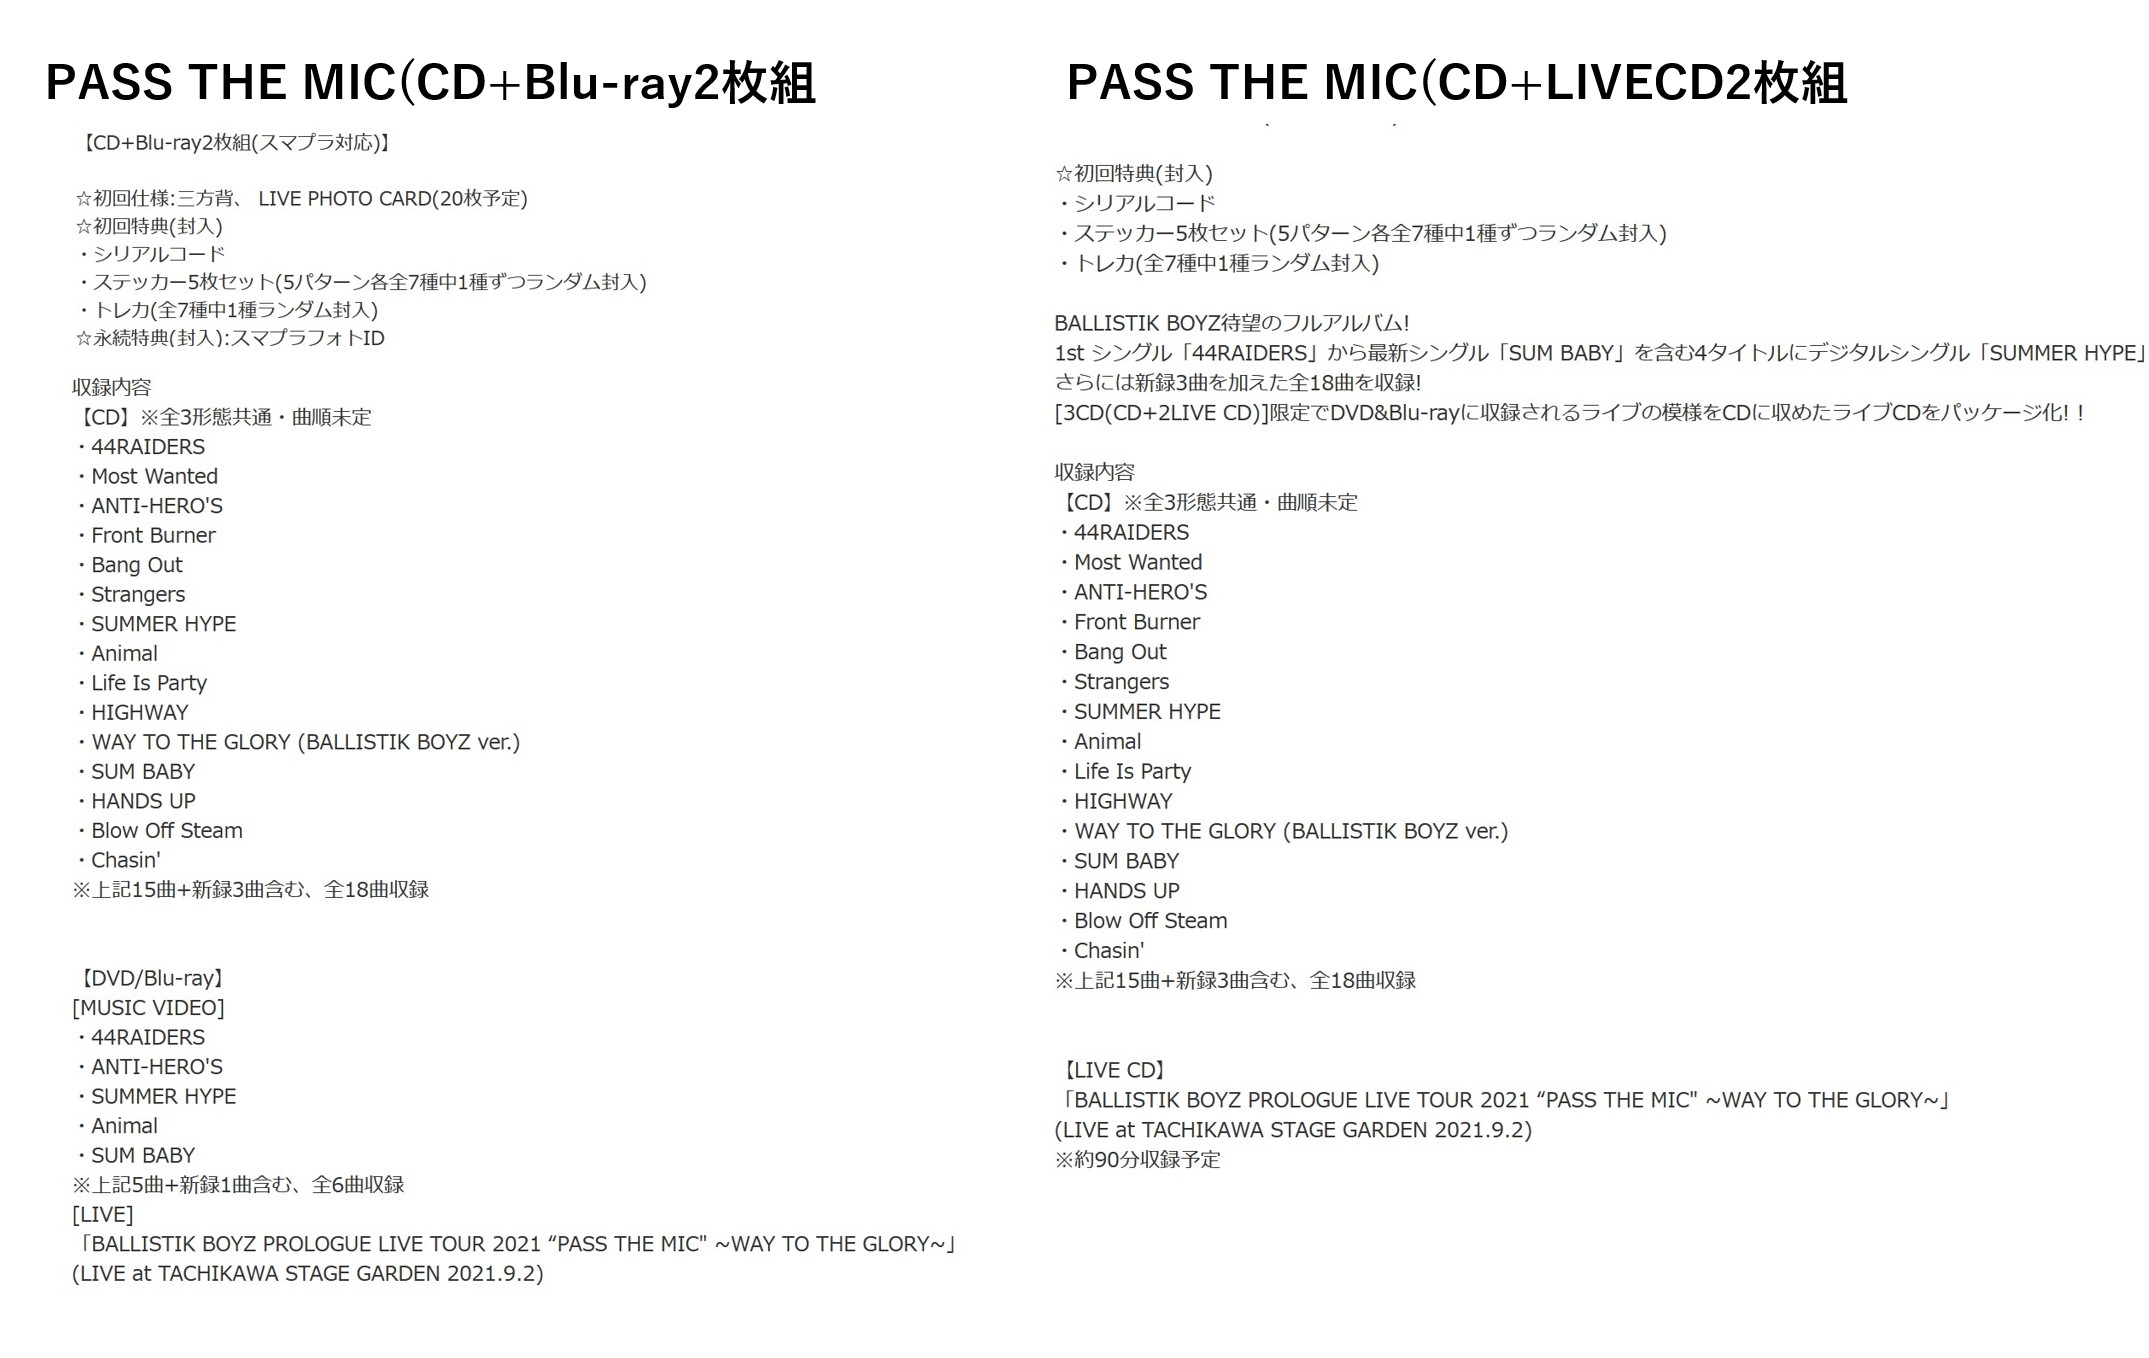 PASS THE MIC 3CD シリアルコード付き